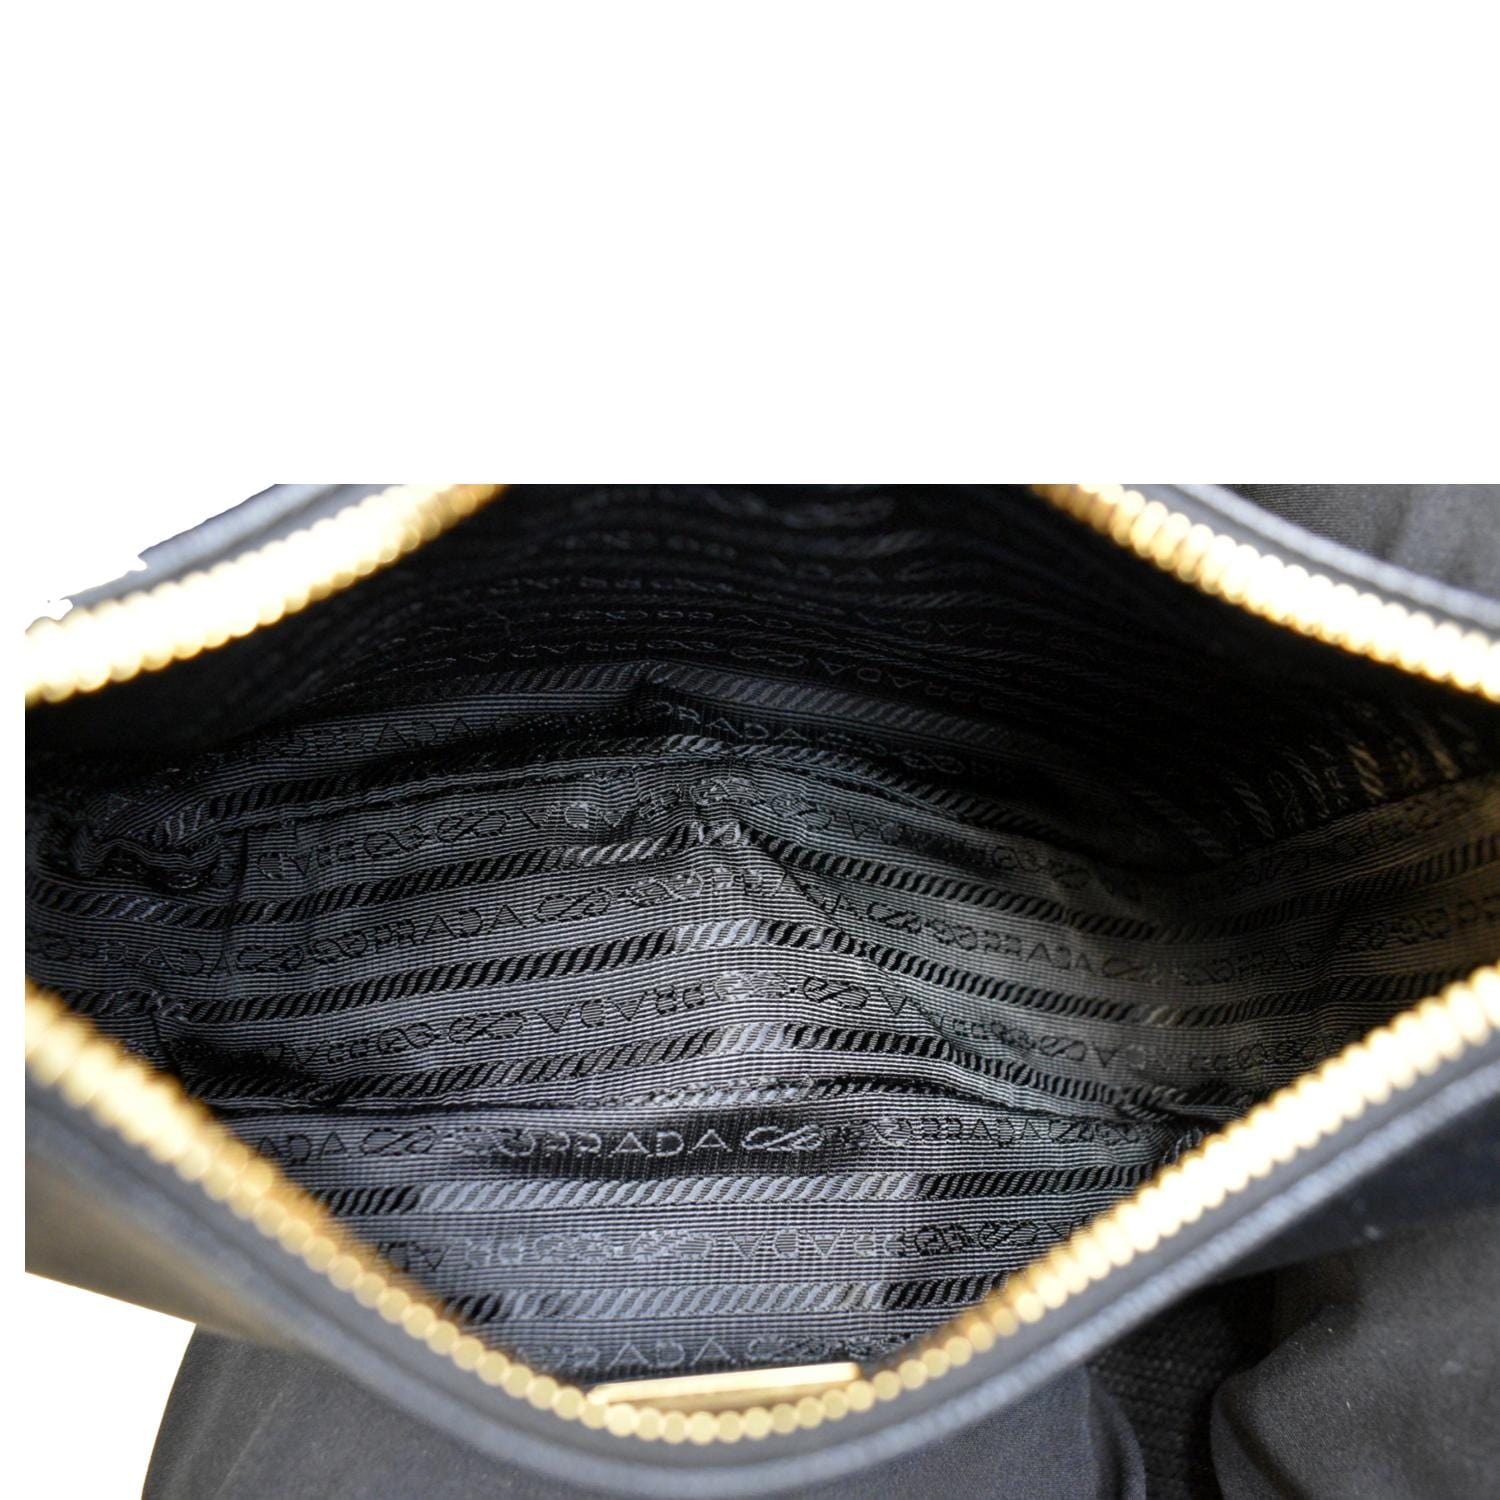 Prada Re-Edition 2005 saffiano leather bag - ShopStyle